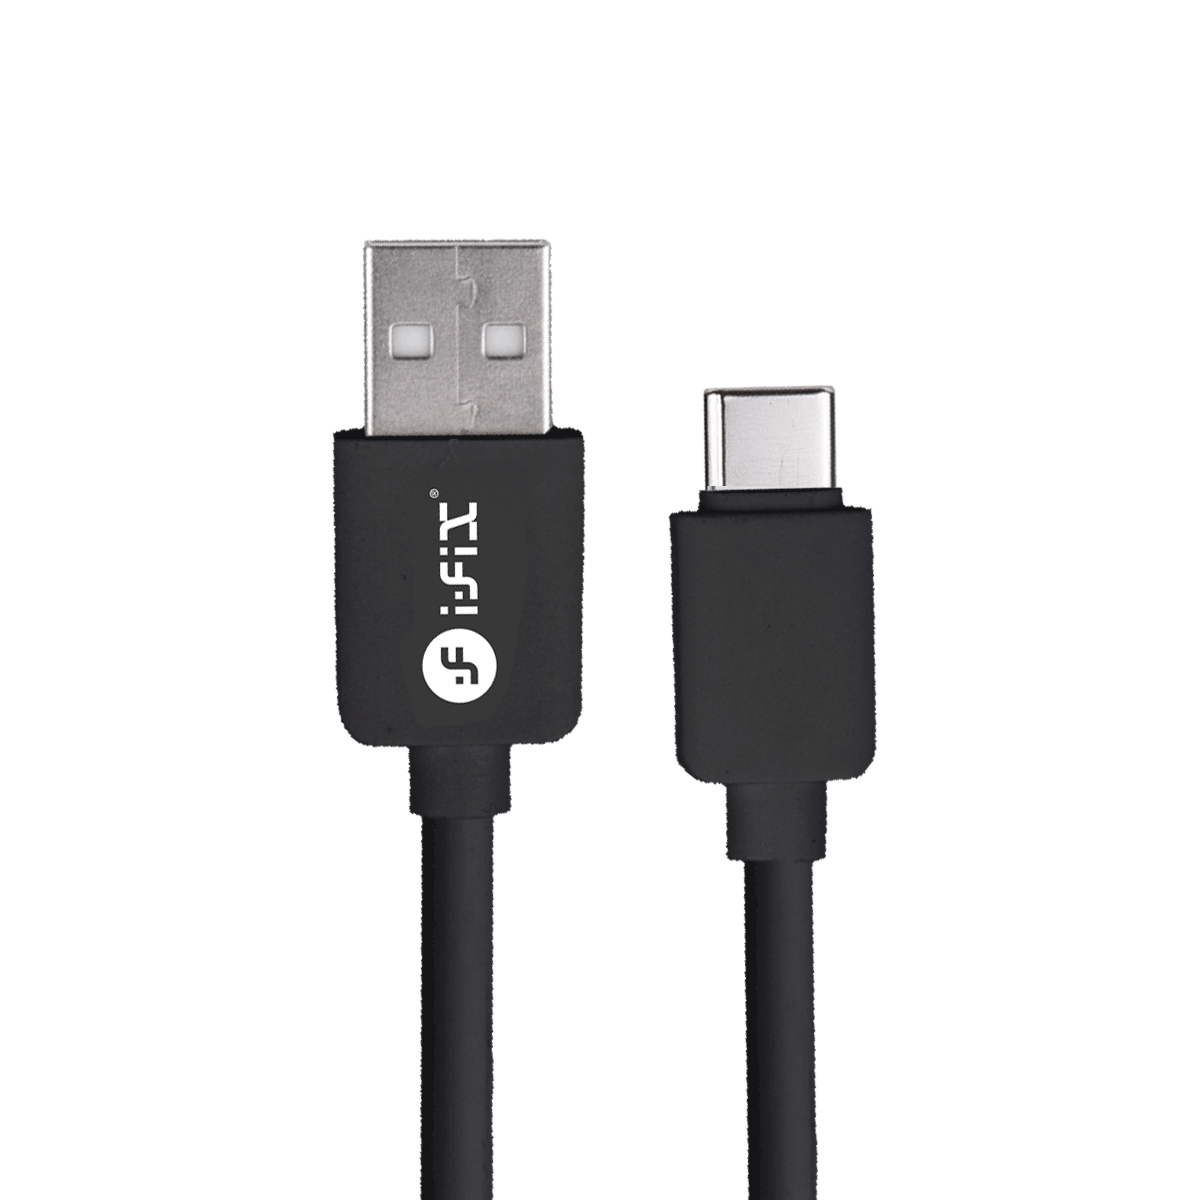 IF-QC 3.0 Qualcomm Type-C USB Data Cable (Black)